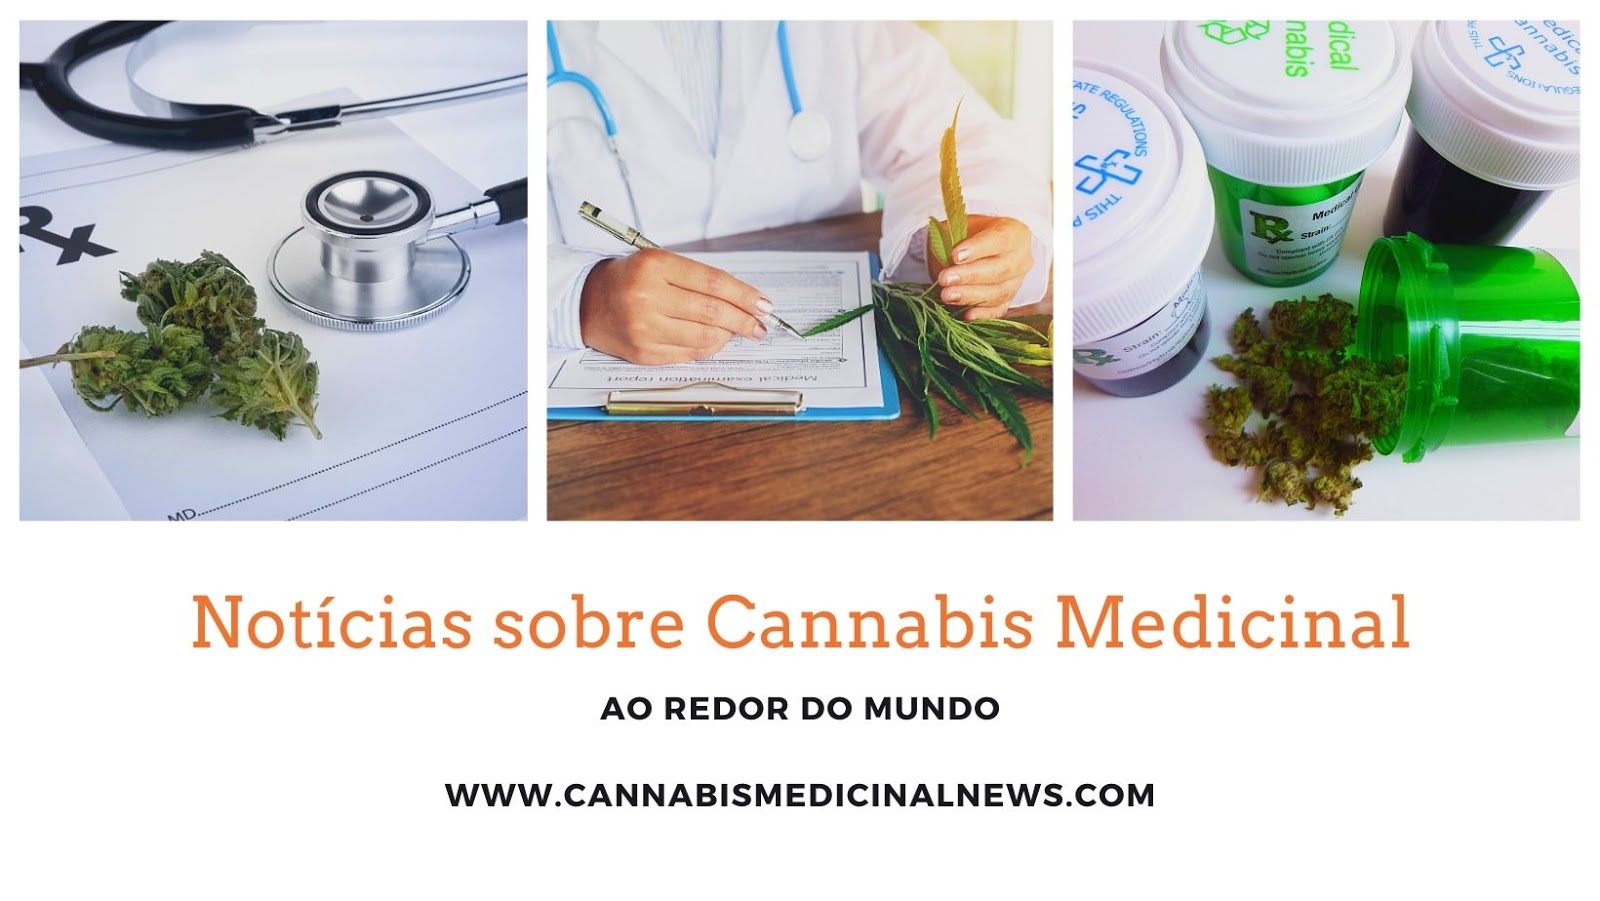 Cannabis Medicinal News